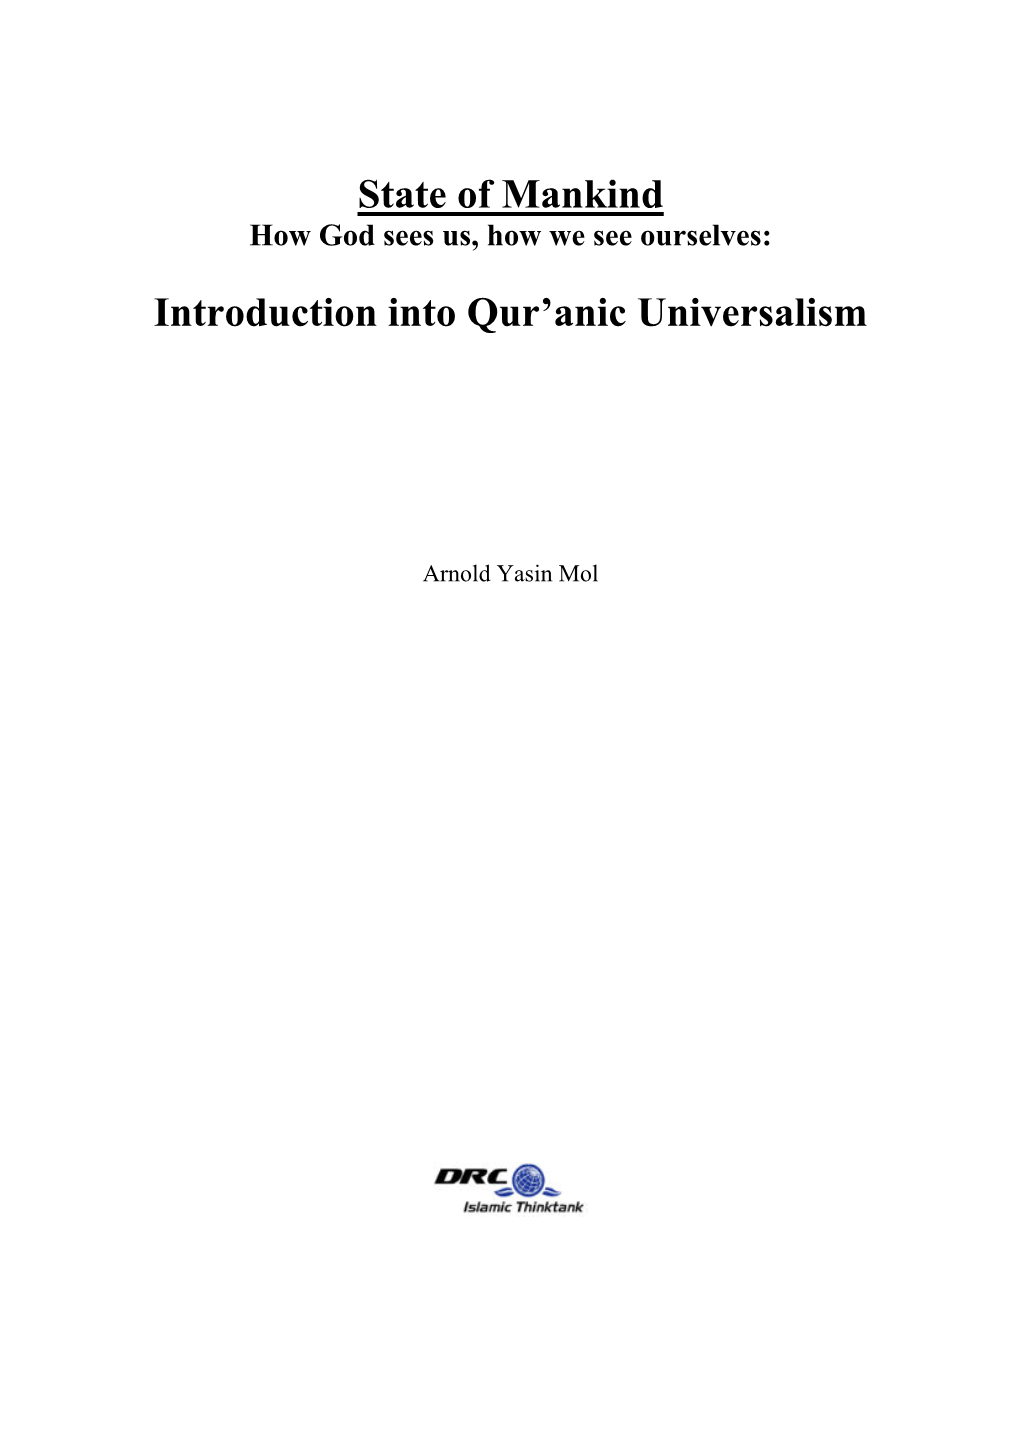 State of Mankind Qur'anic Universalism